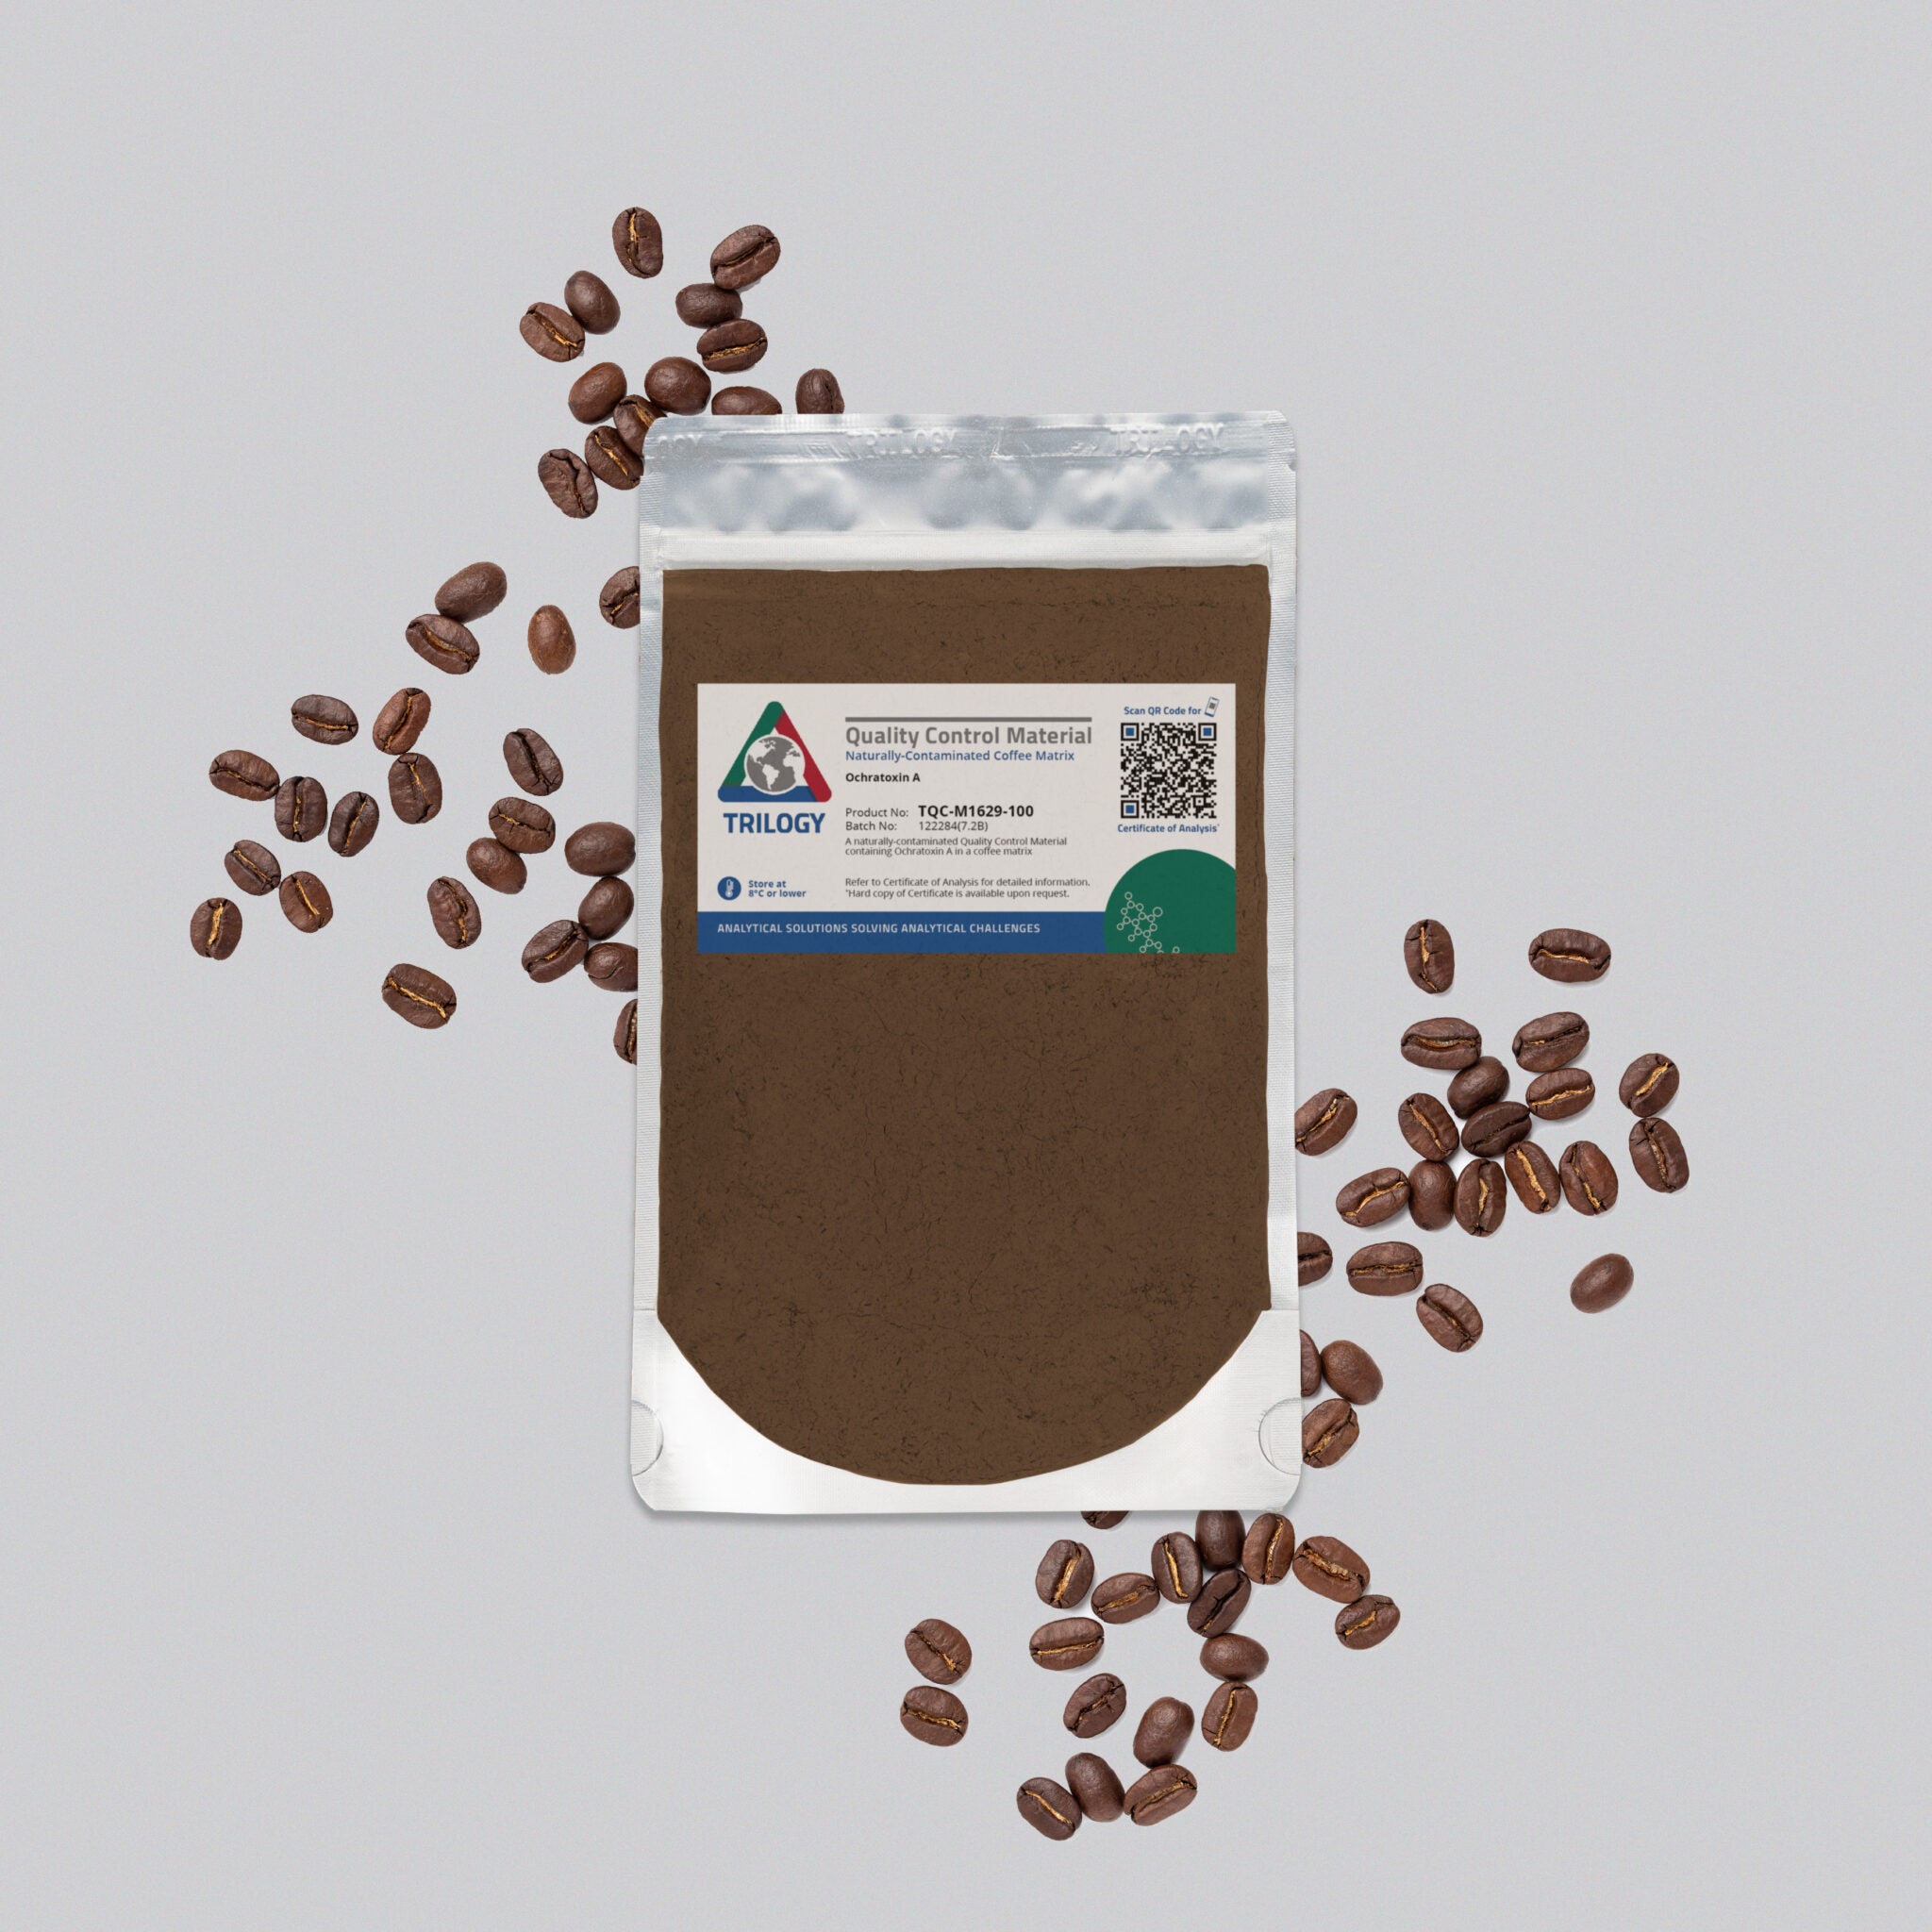 Ochratoxin A in Coffee Quality Control Material